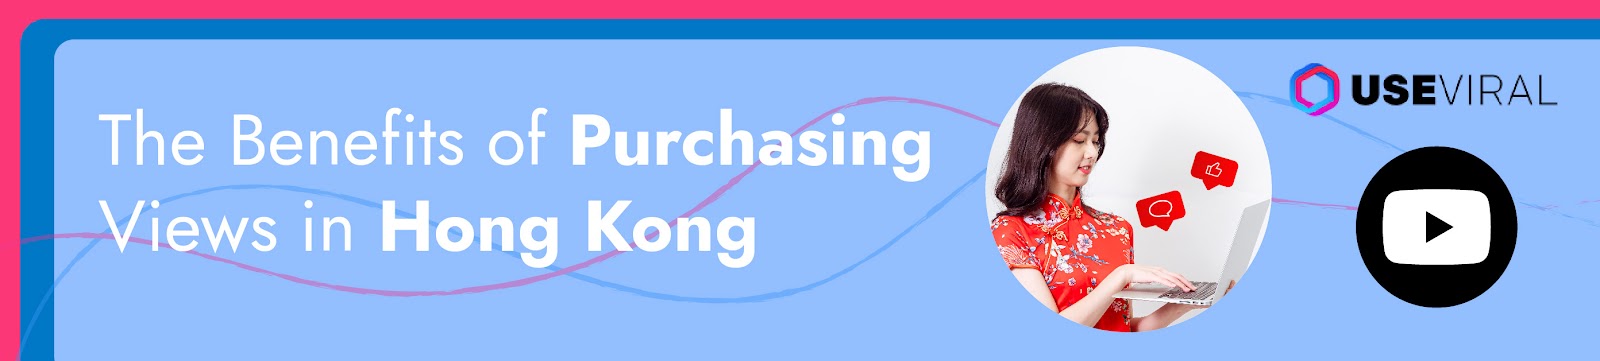 The Benefits of Purchasing Views in Hong Kong